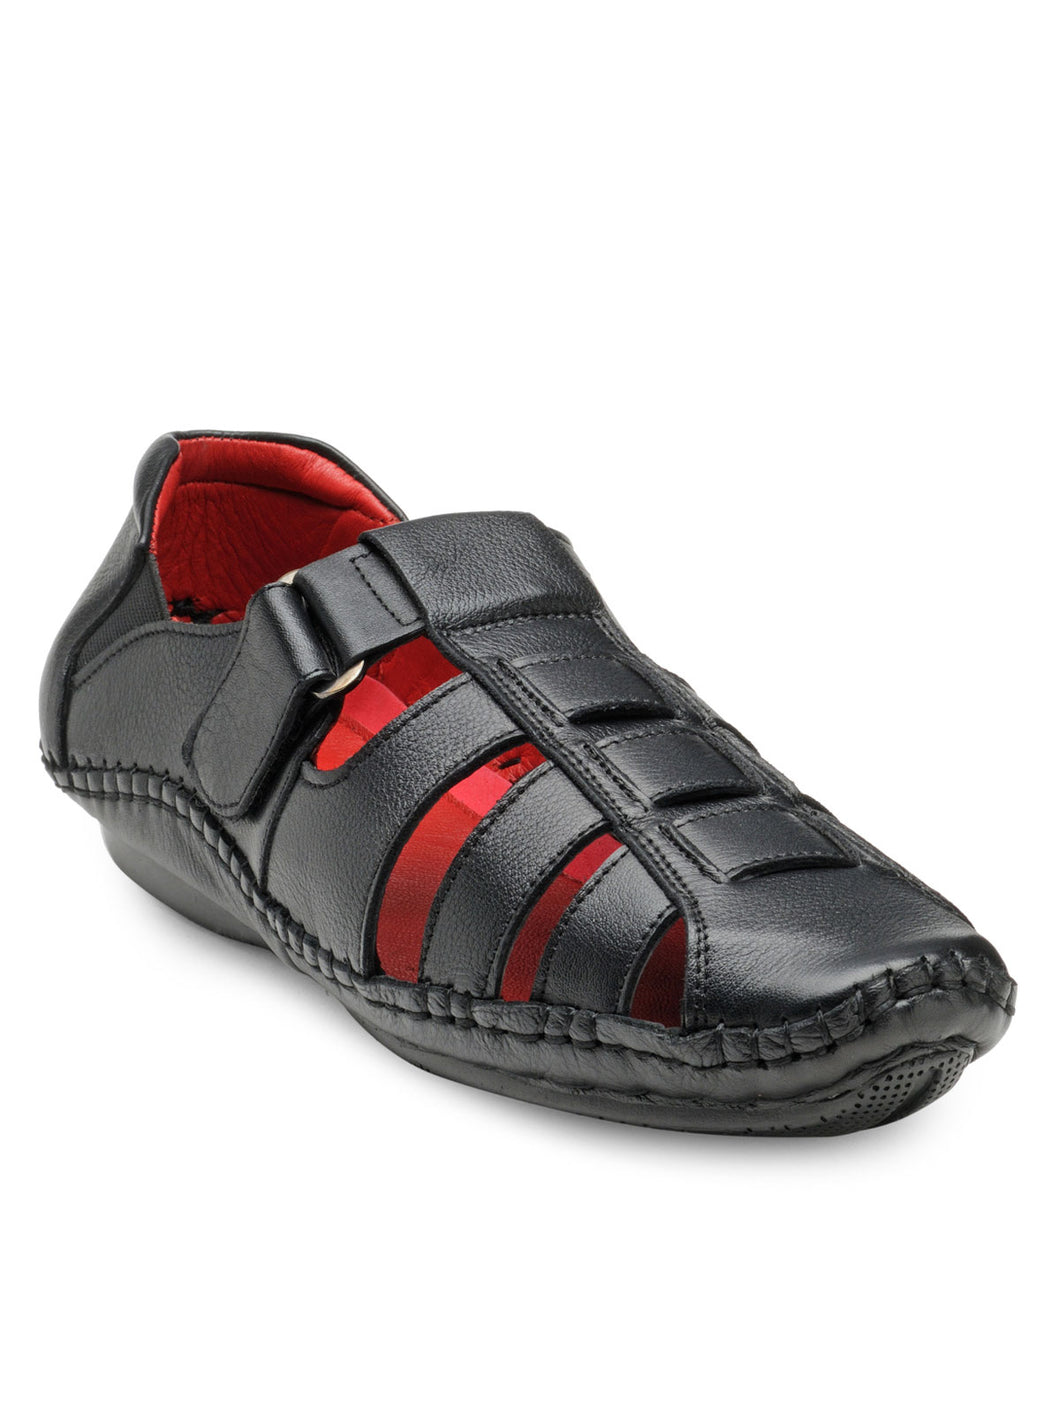 Teakwood Leather Men's Black Slipper & Sandals Footwear